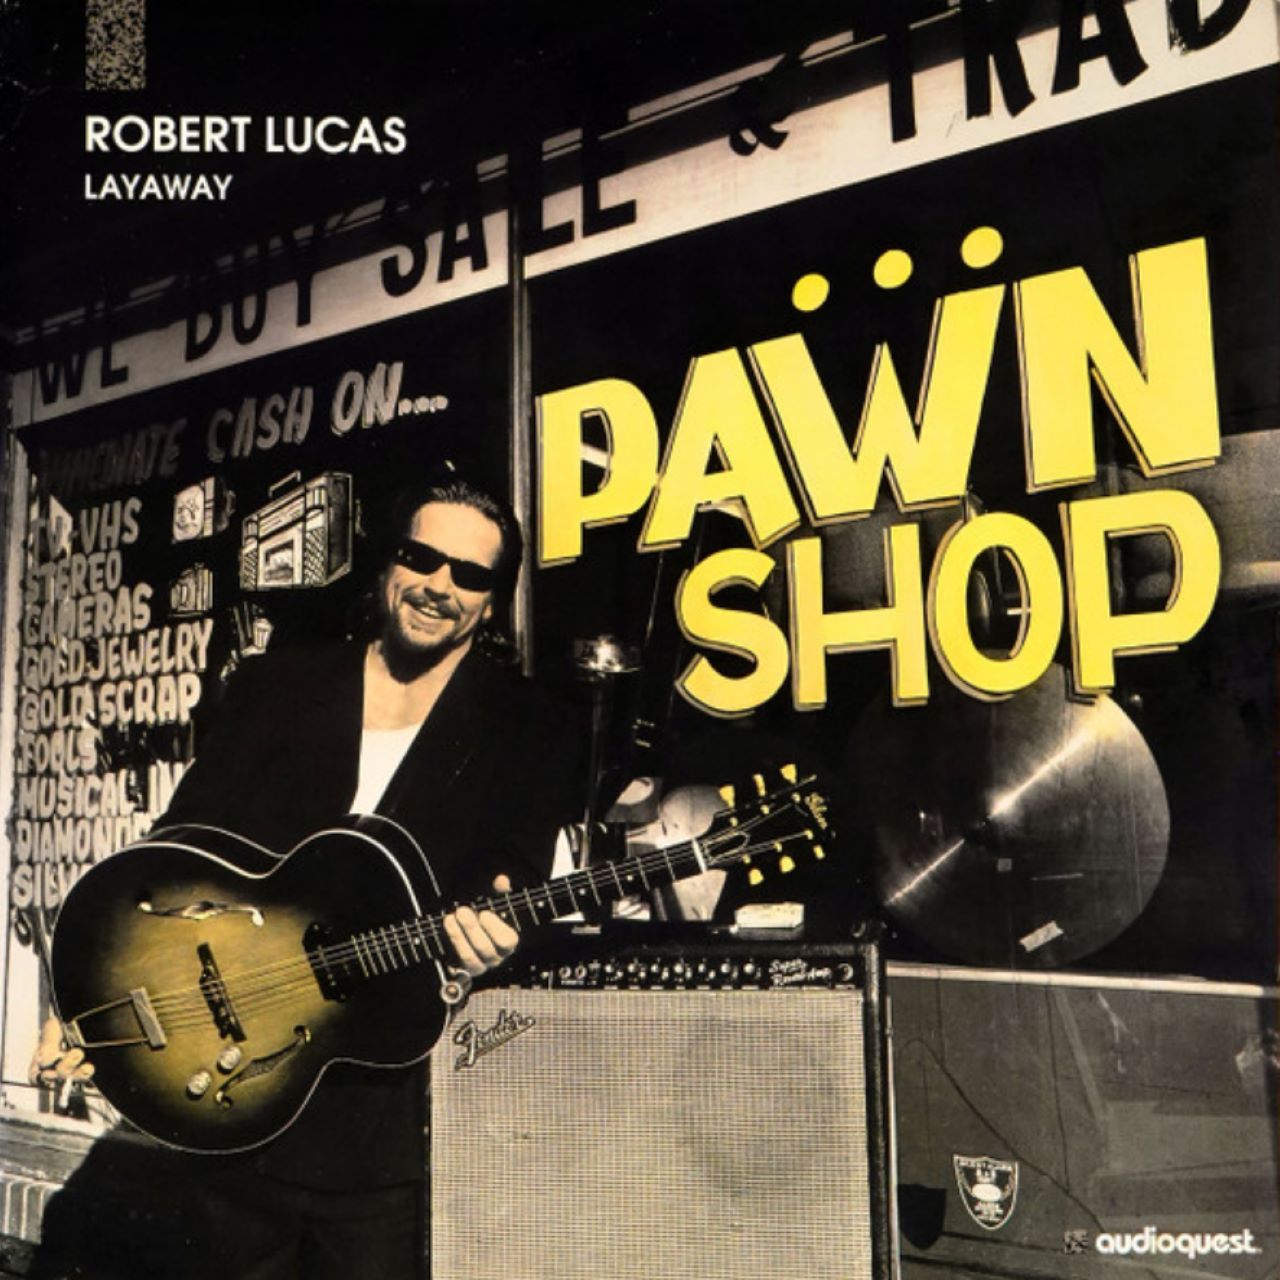 Robert Lucas – Layaway cover album